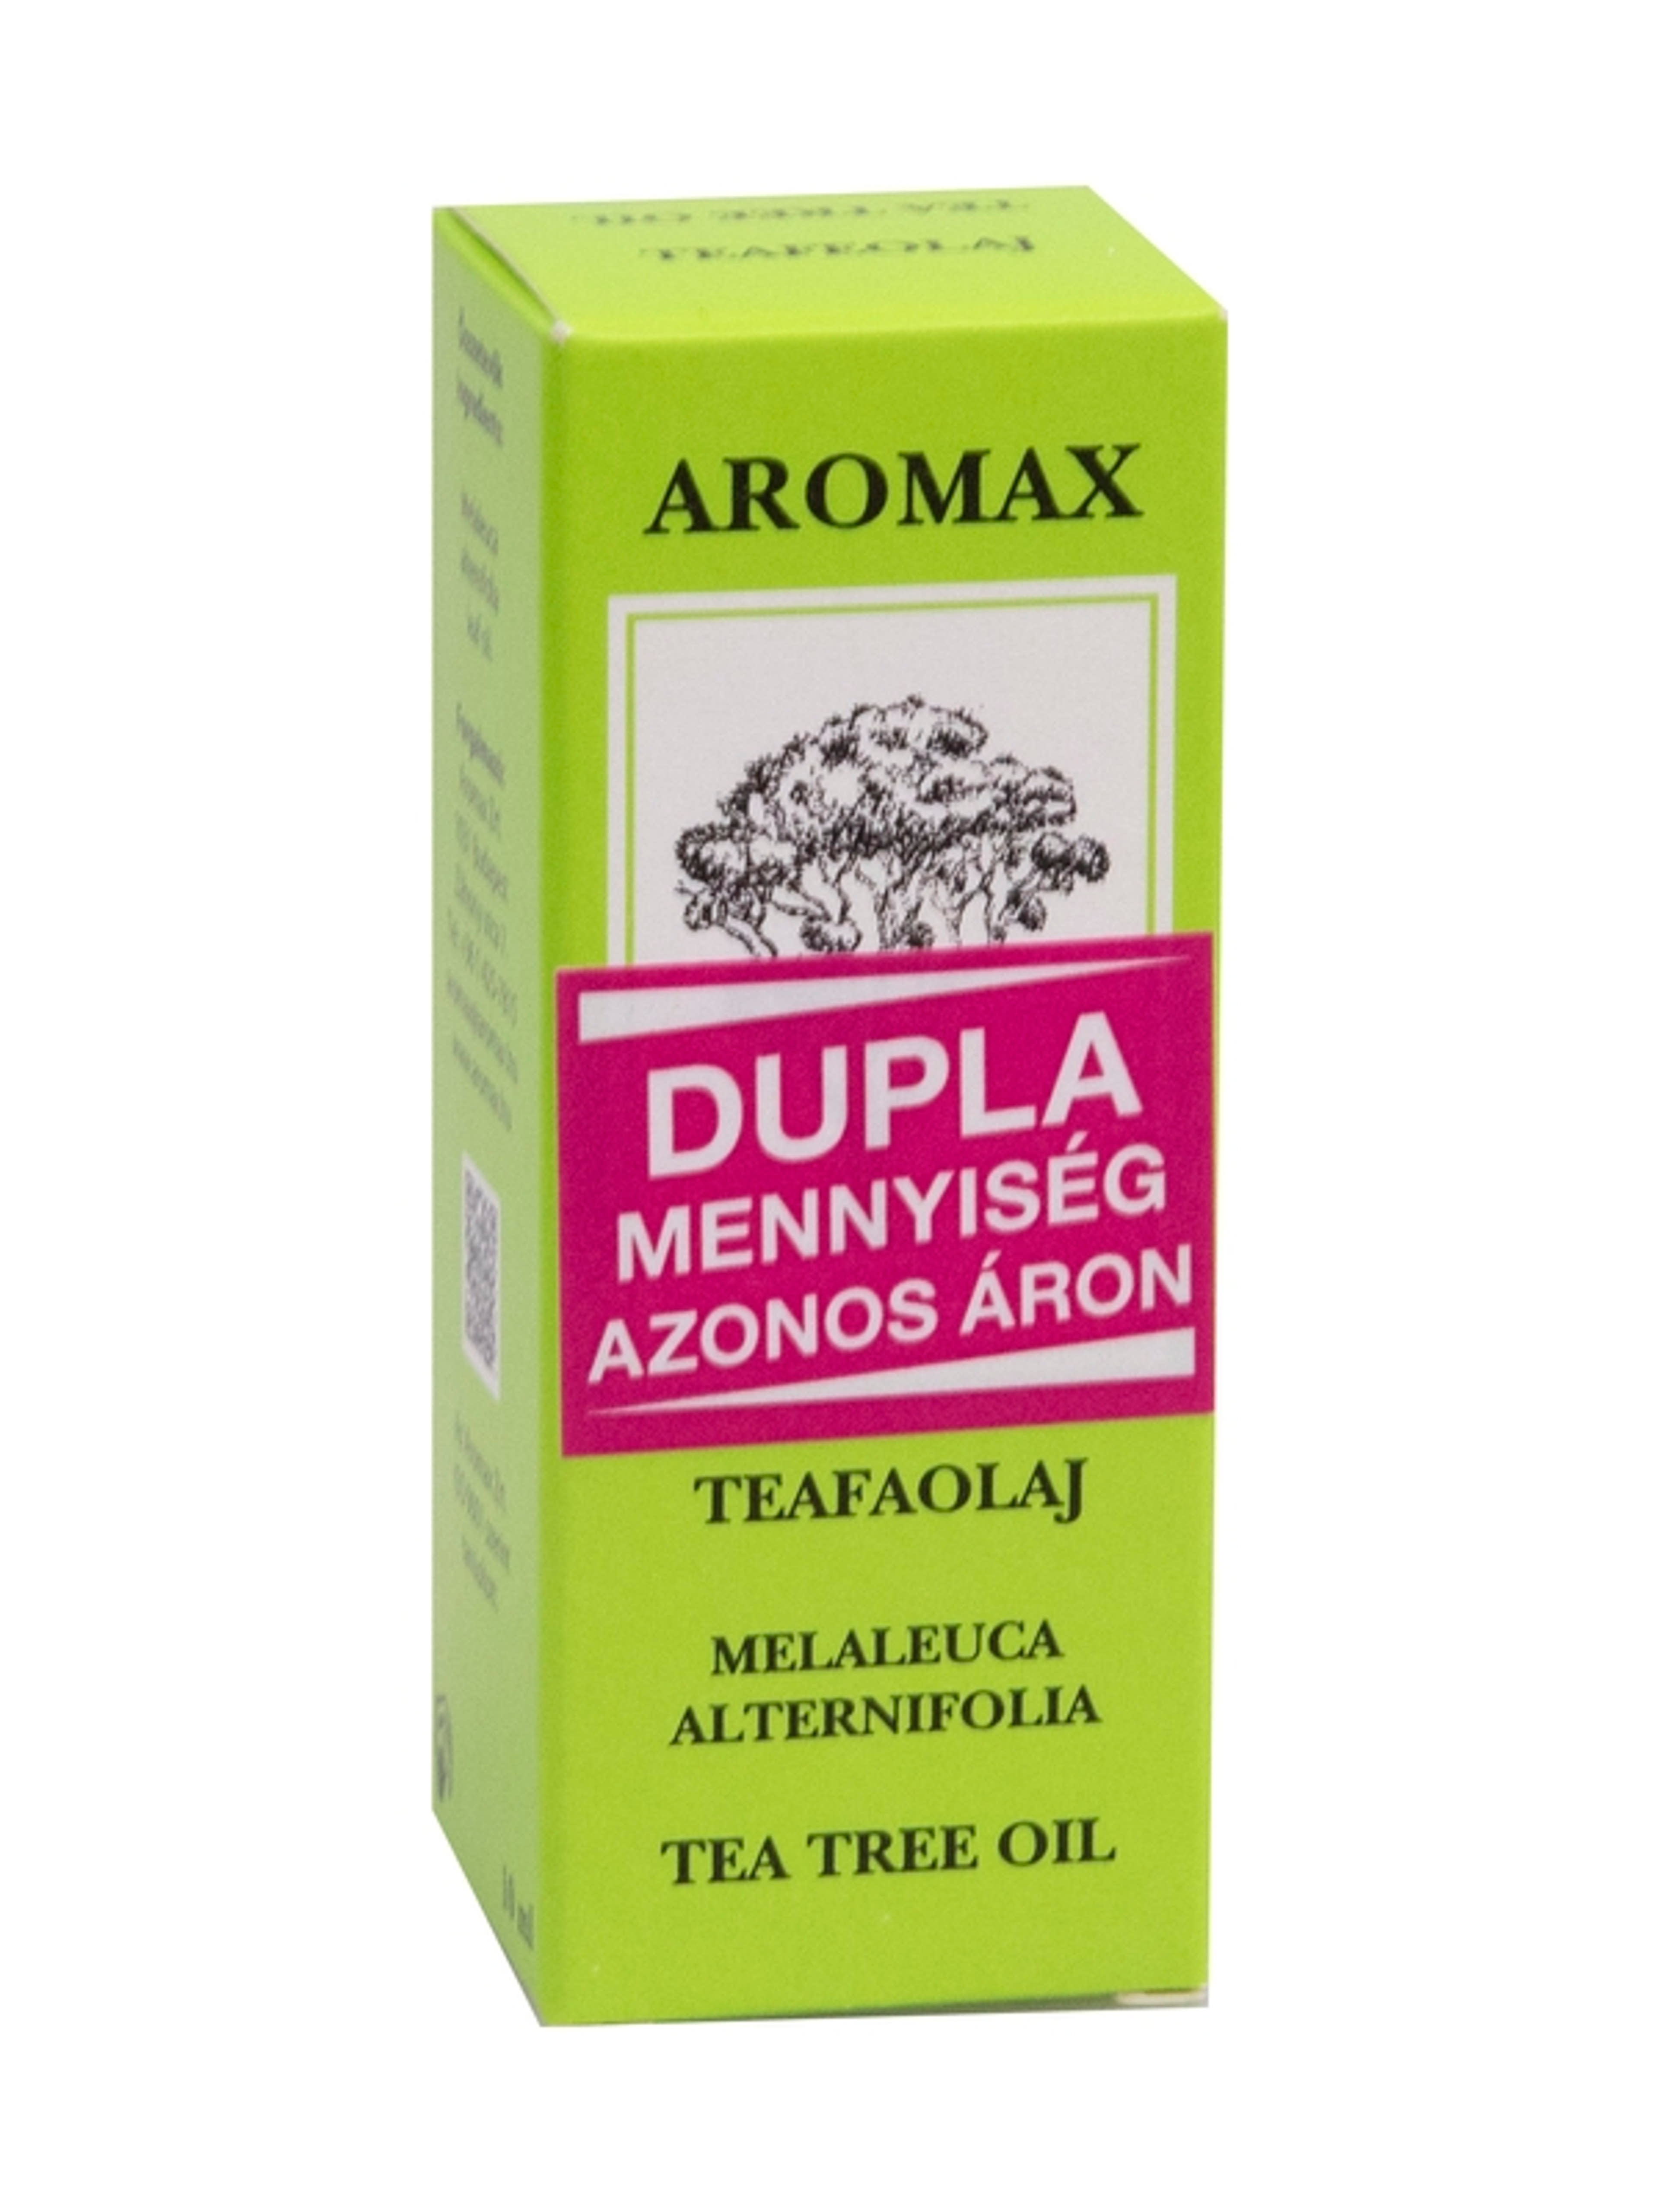 Aromax teafaolaj - 10 ml